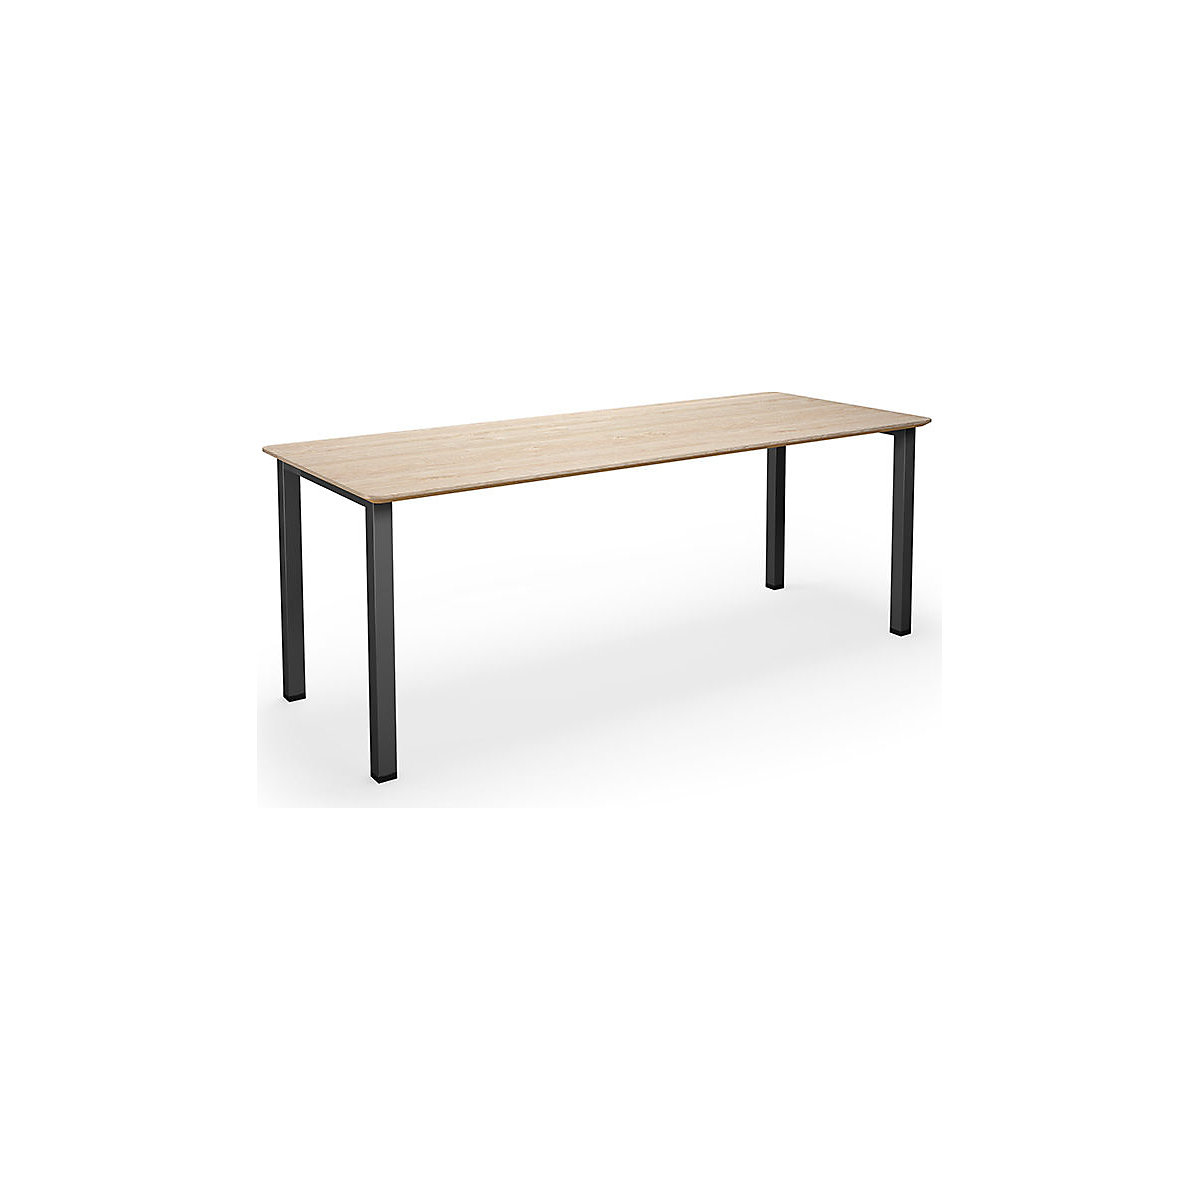 DUO-U Trend multi-purpose desk, straight tabletop, rounded corners